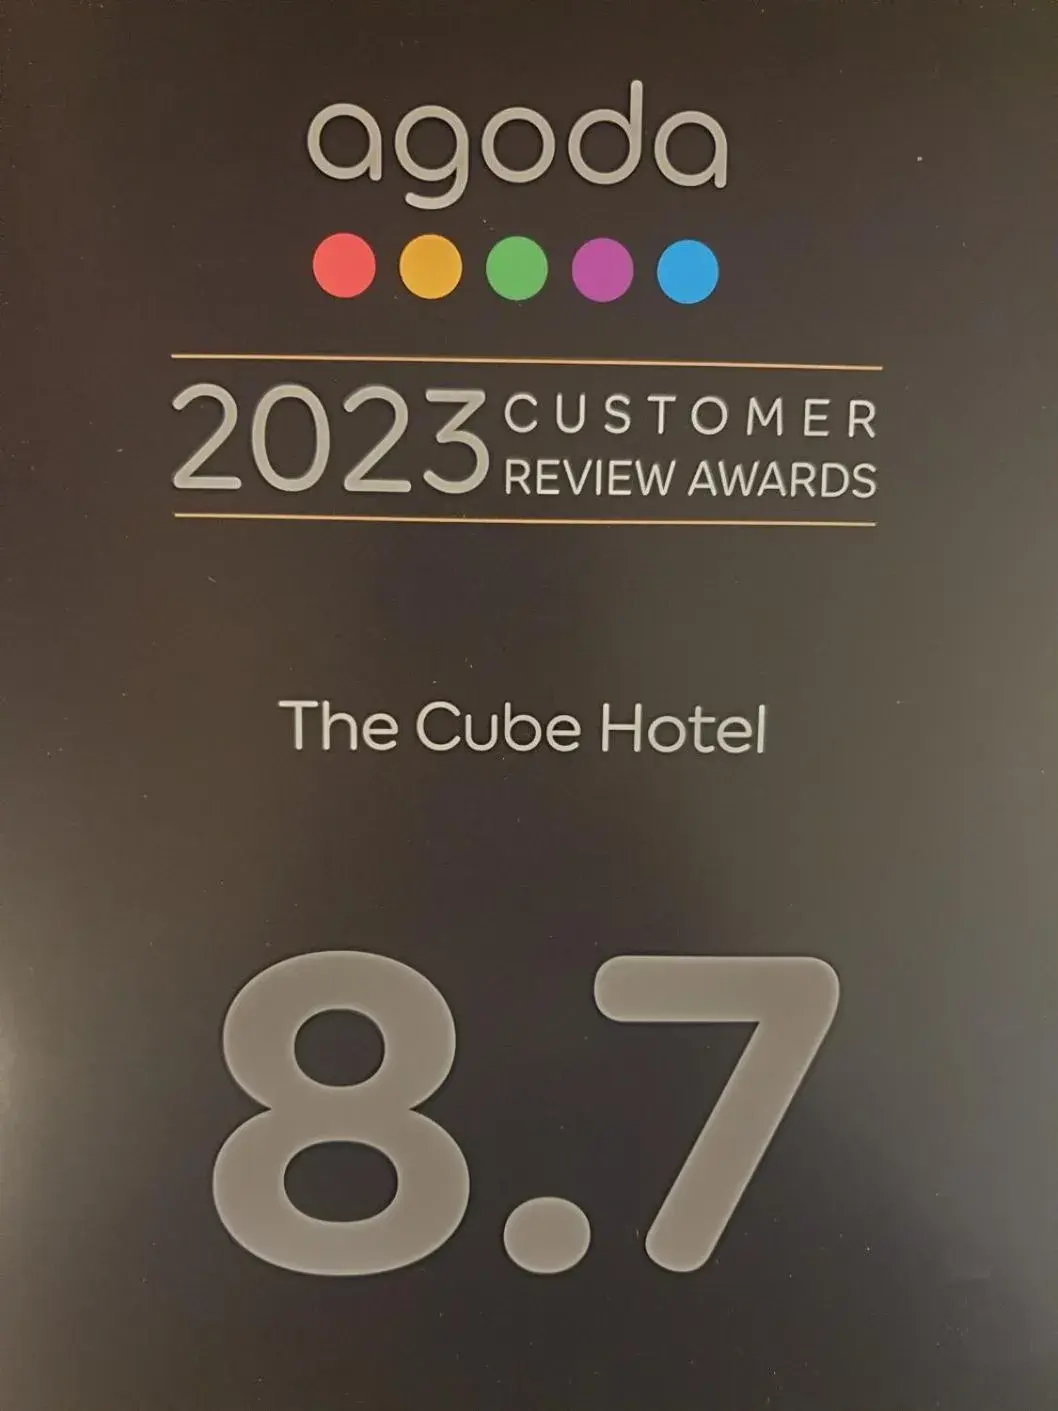 Certificate/Award in The Cube Hotel